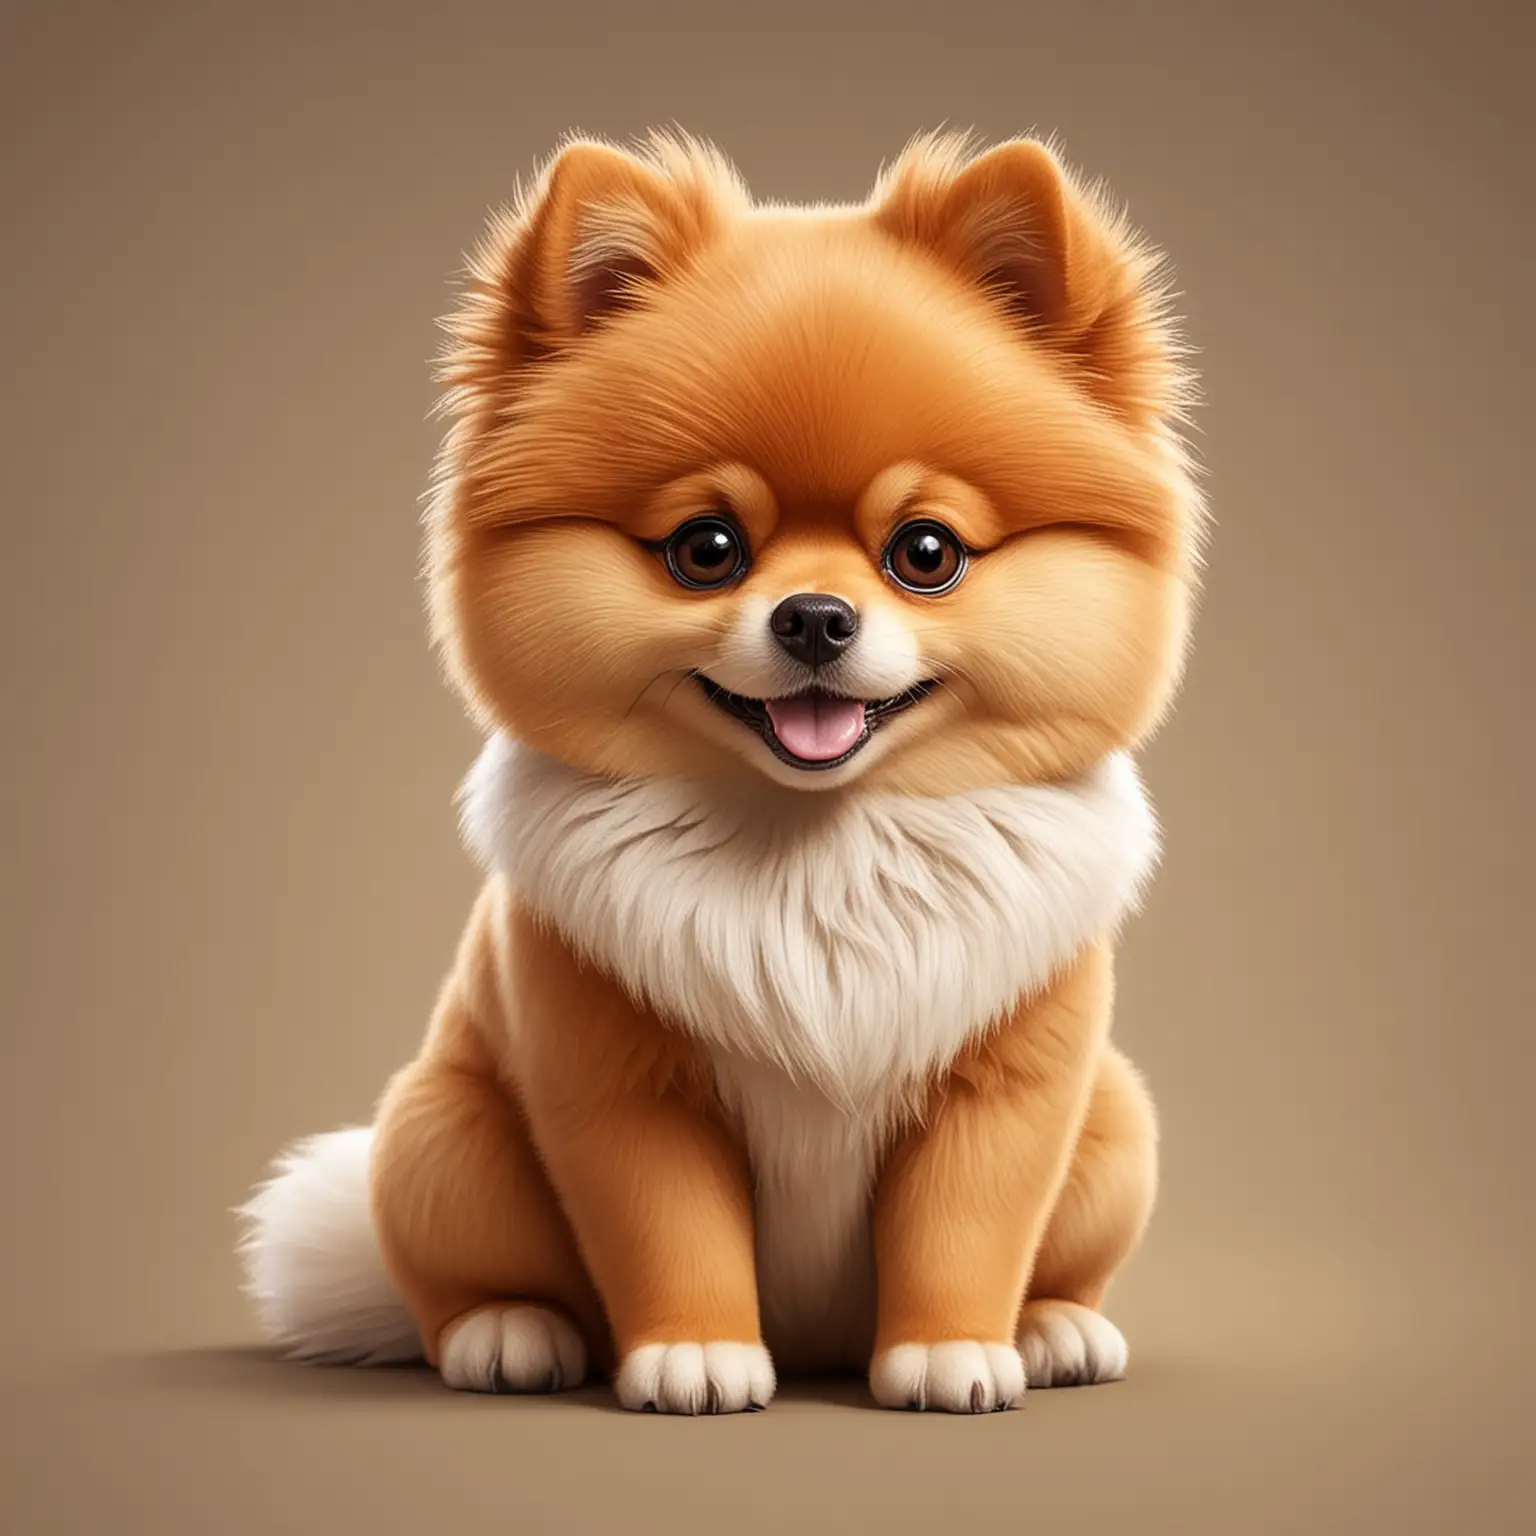 Cartoon-Pomeranian-Dog-Sitting-Pose-Illustration